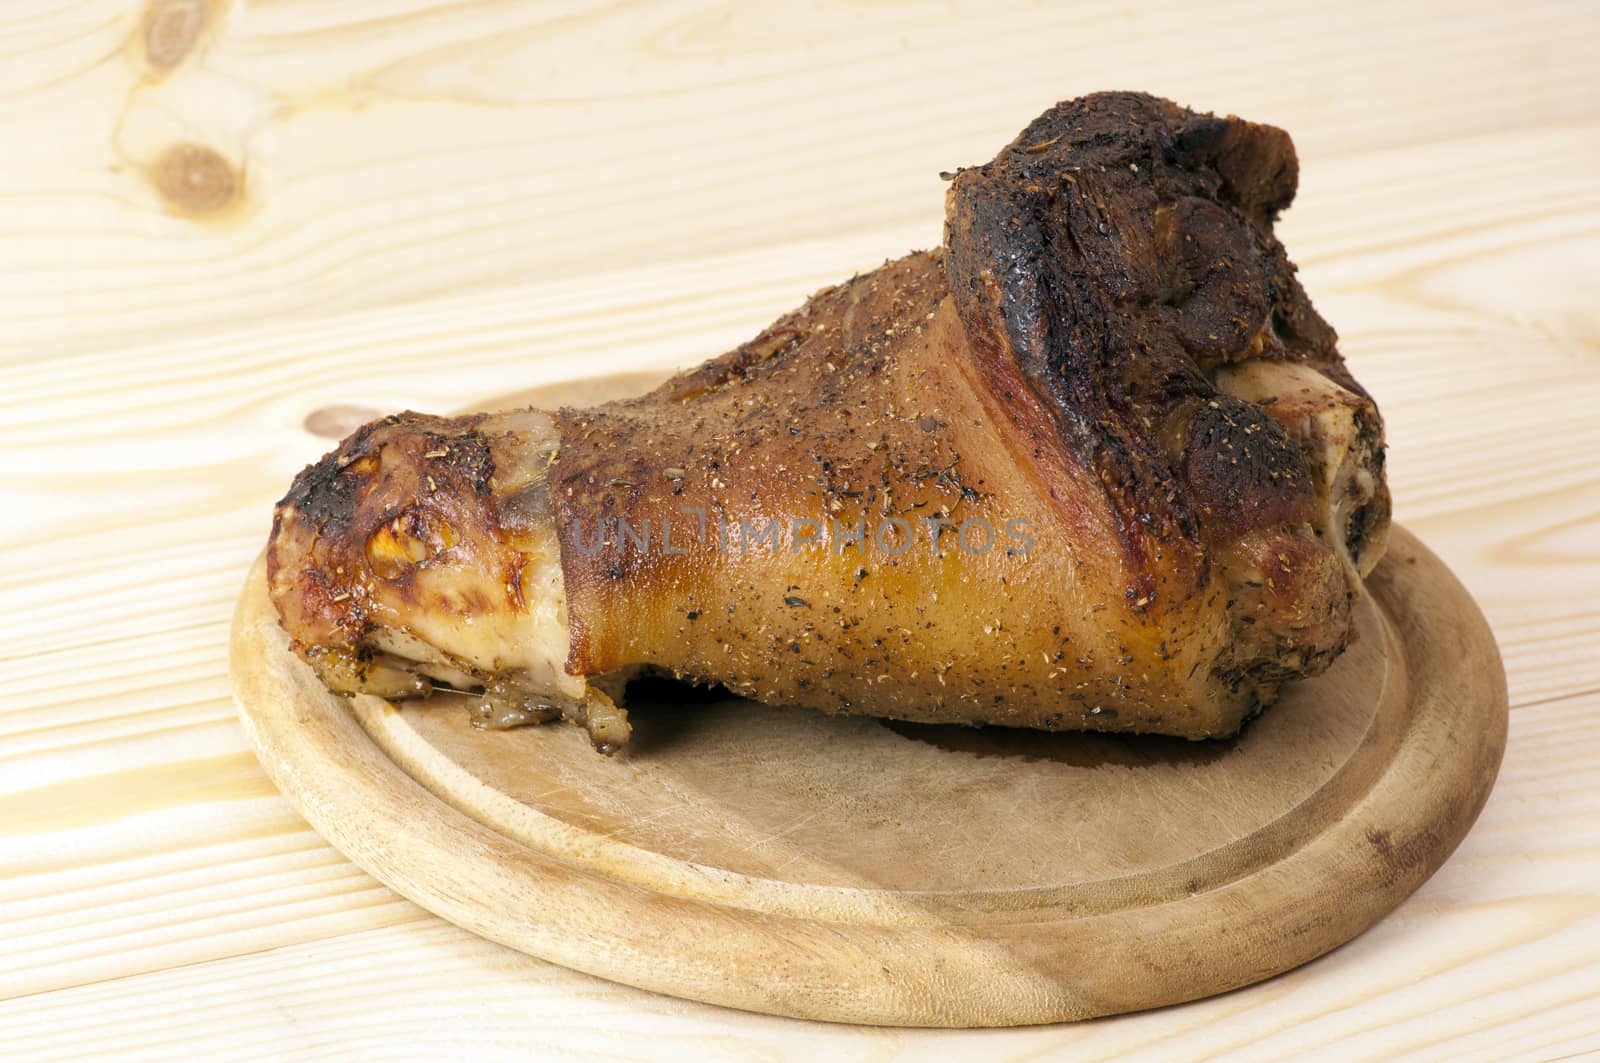 Roasted pork leg served on cutting board